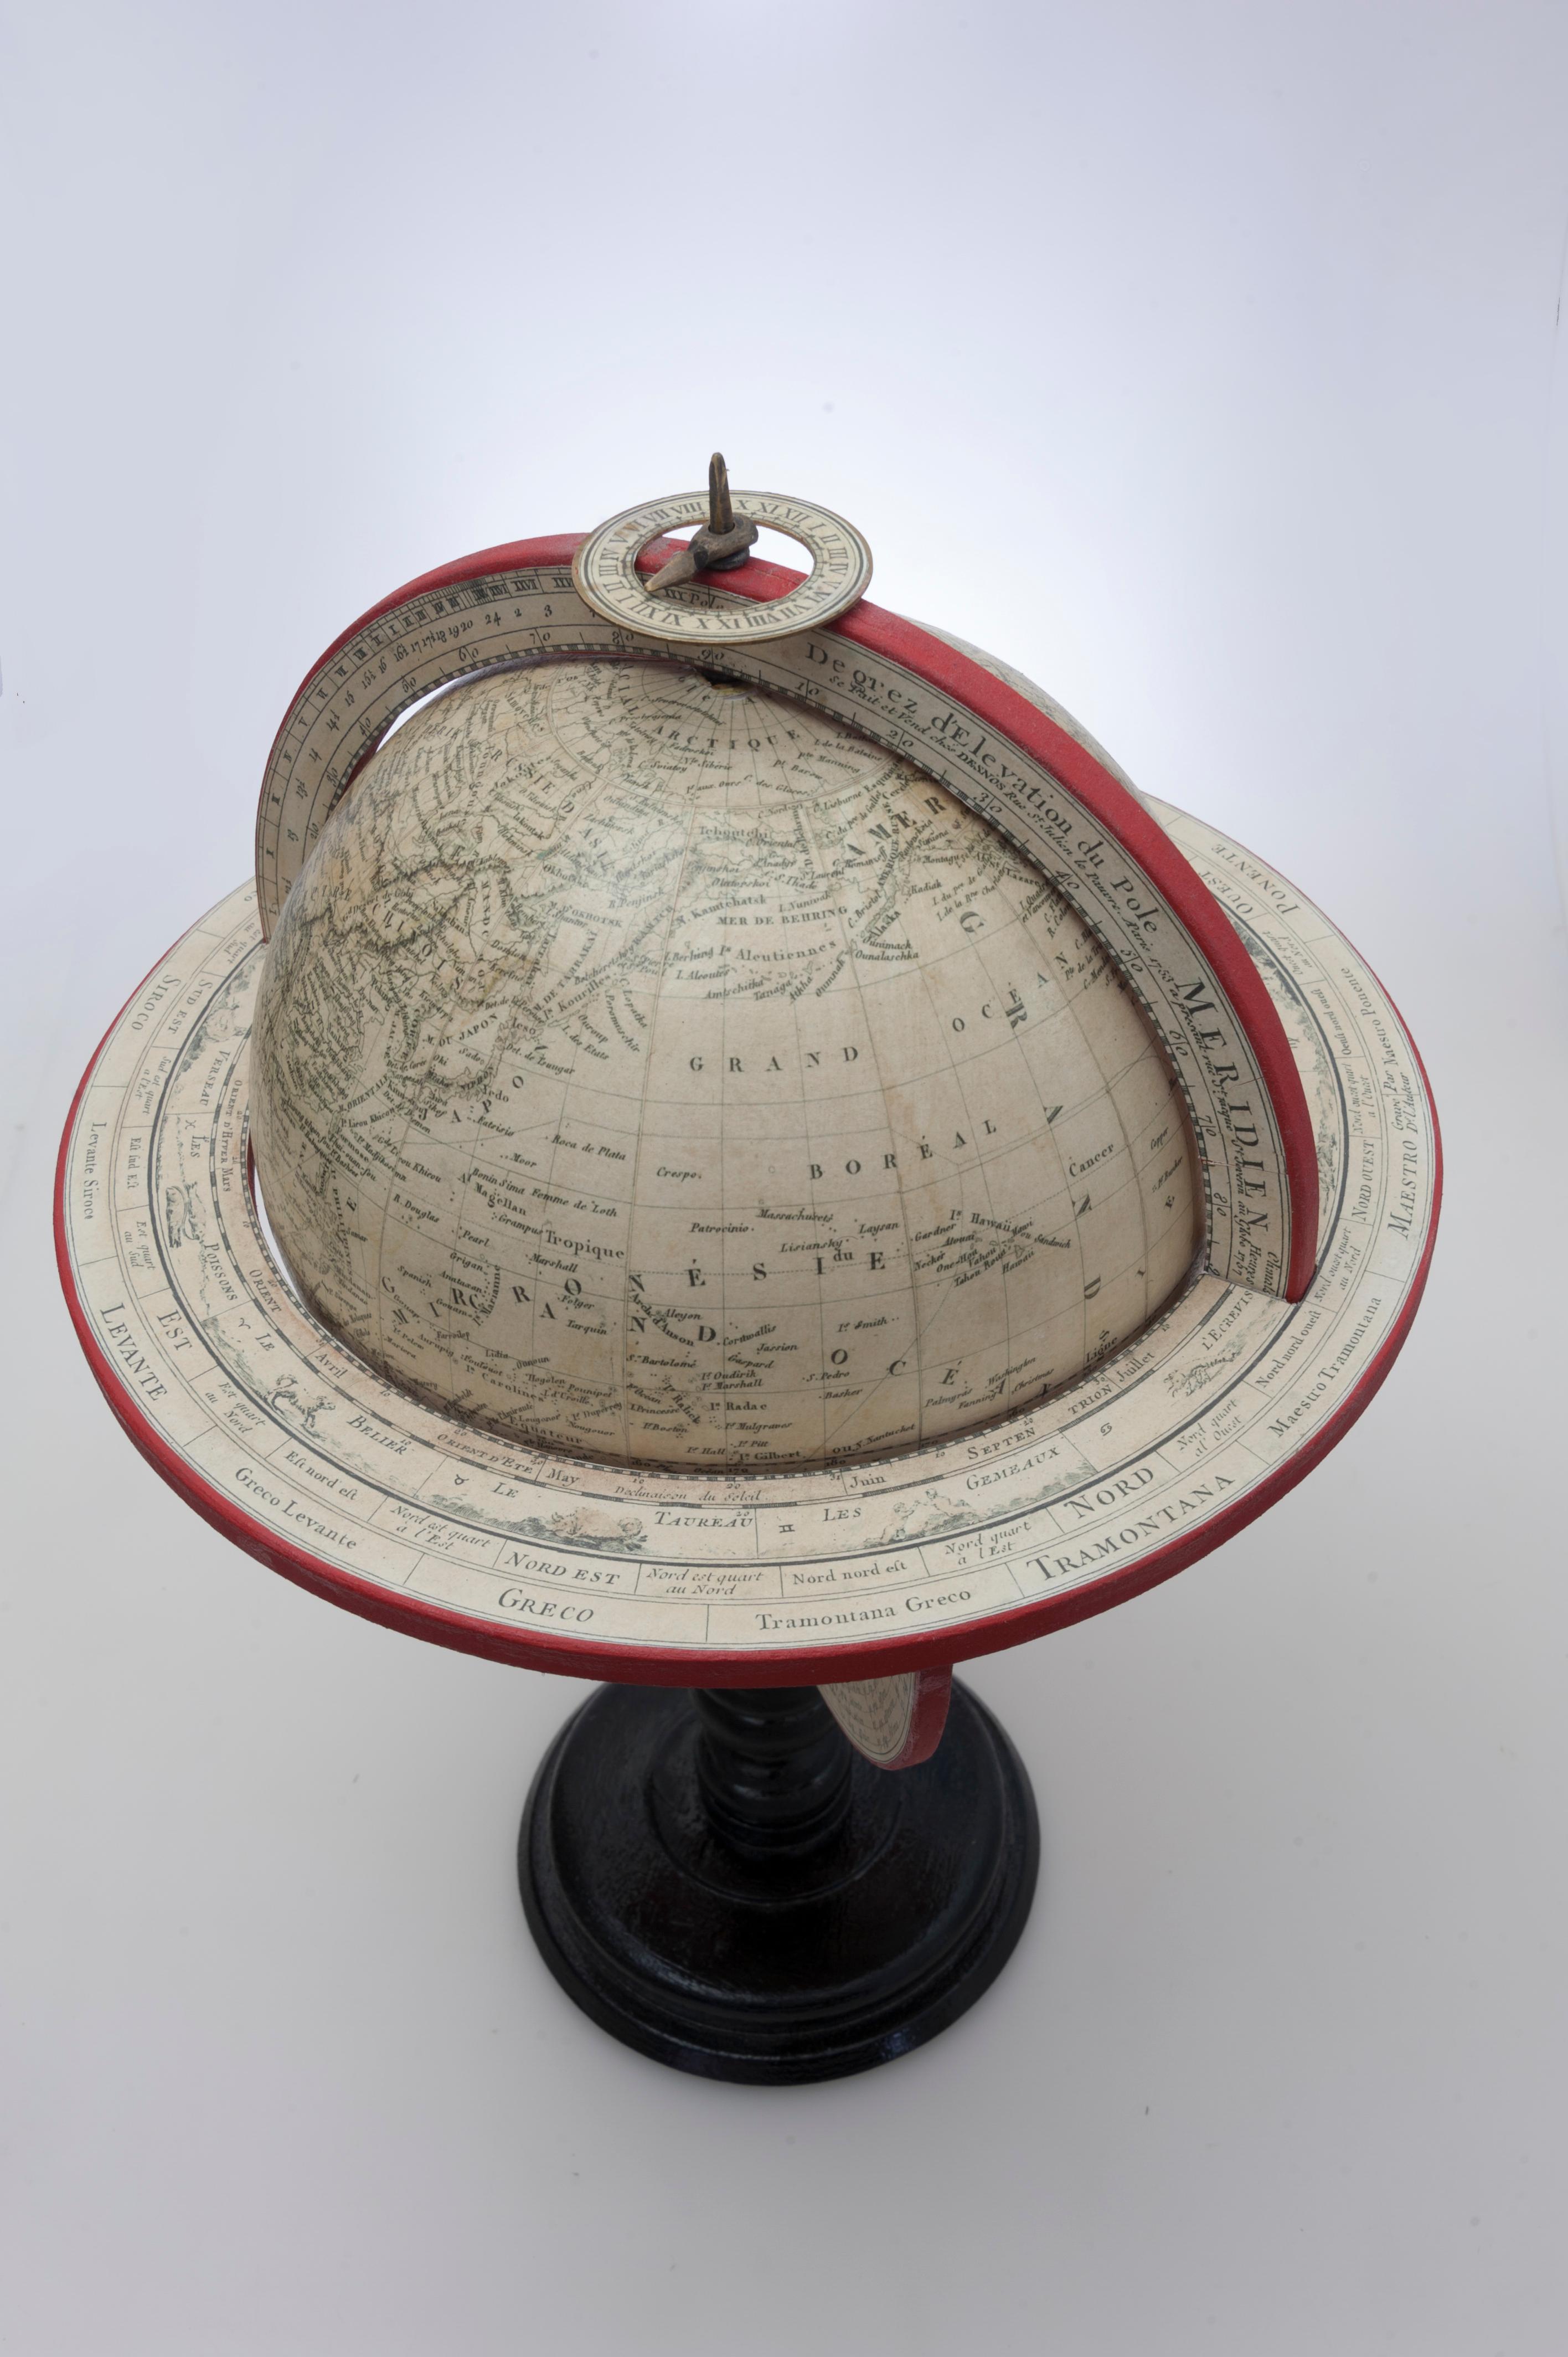 Contemporary Pierre Lapie 9 inch facsimile table globe  ( 1779 - 1850 ) For Sale